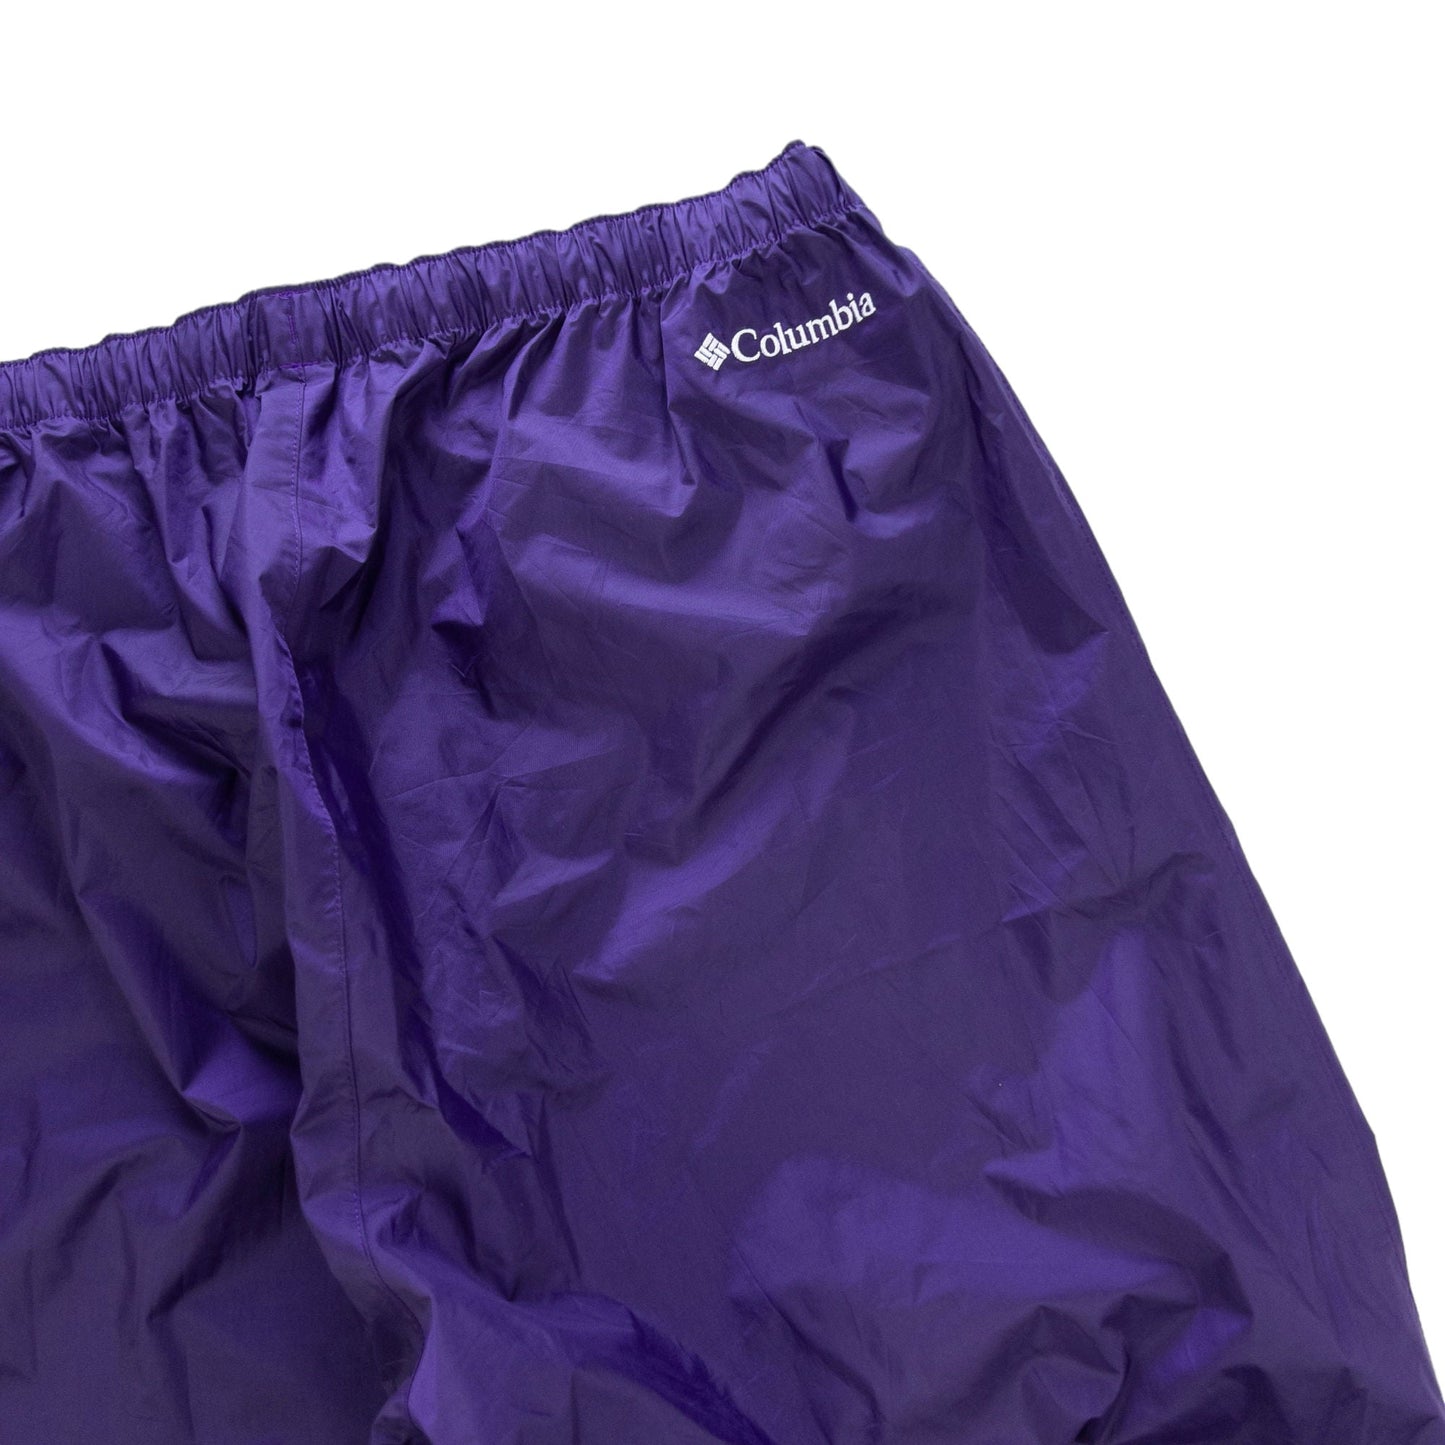 Vintage Columbia Waterproof Trousers Size XL